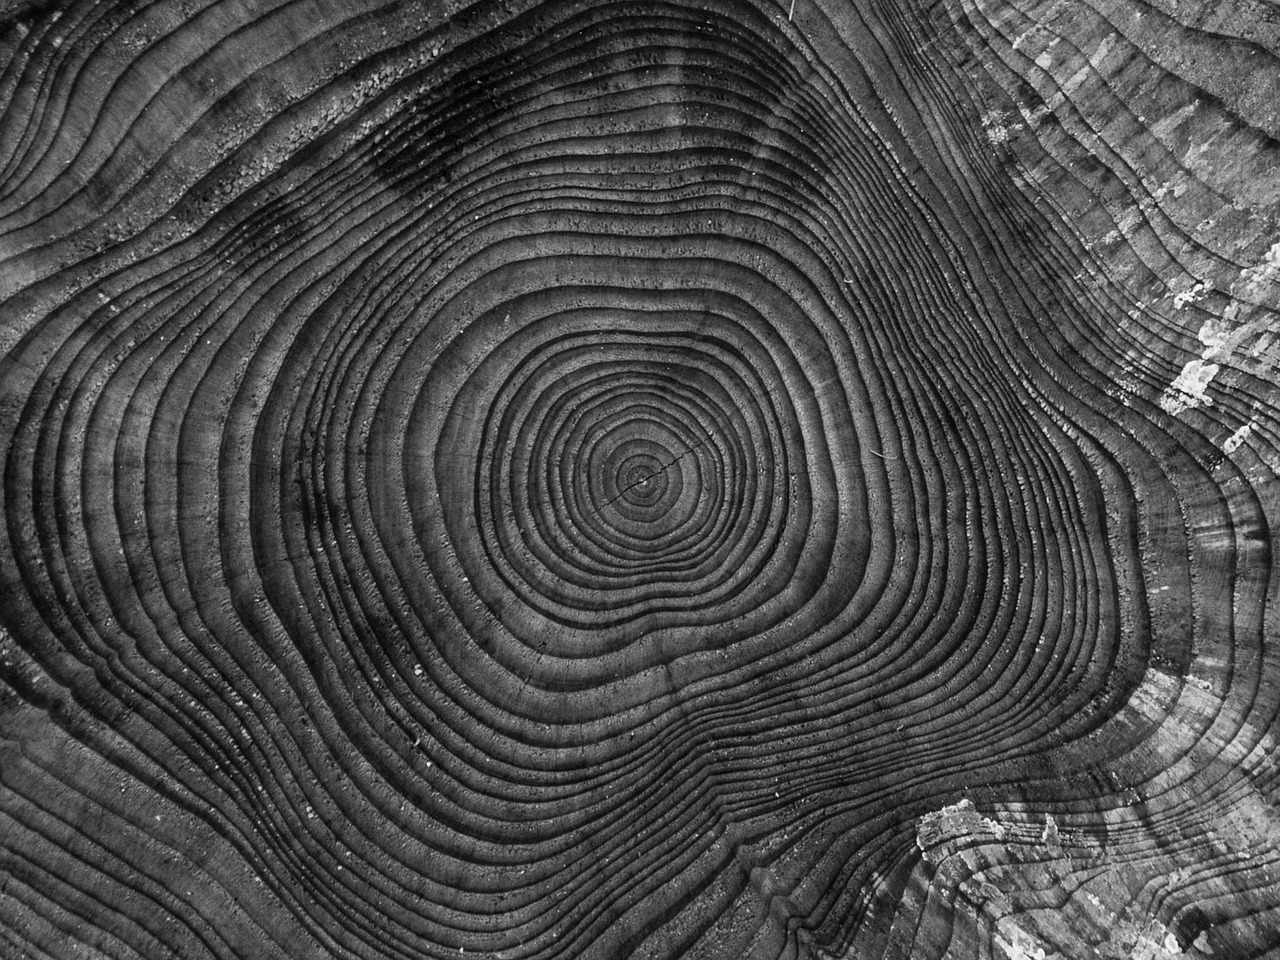 Tree Stump showing Rings of Life